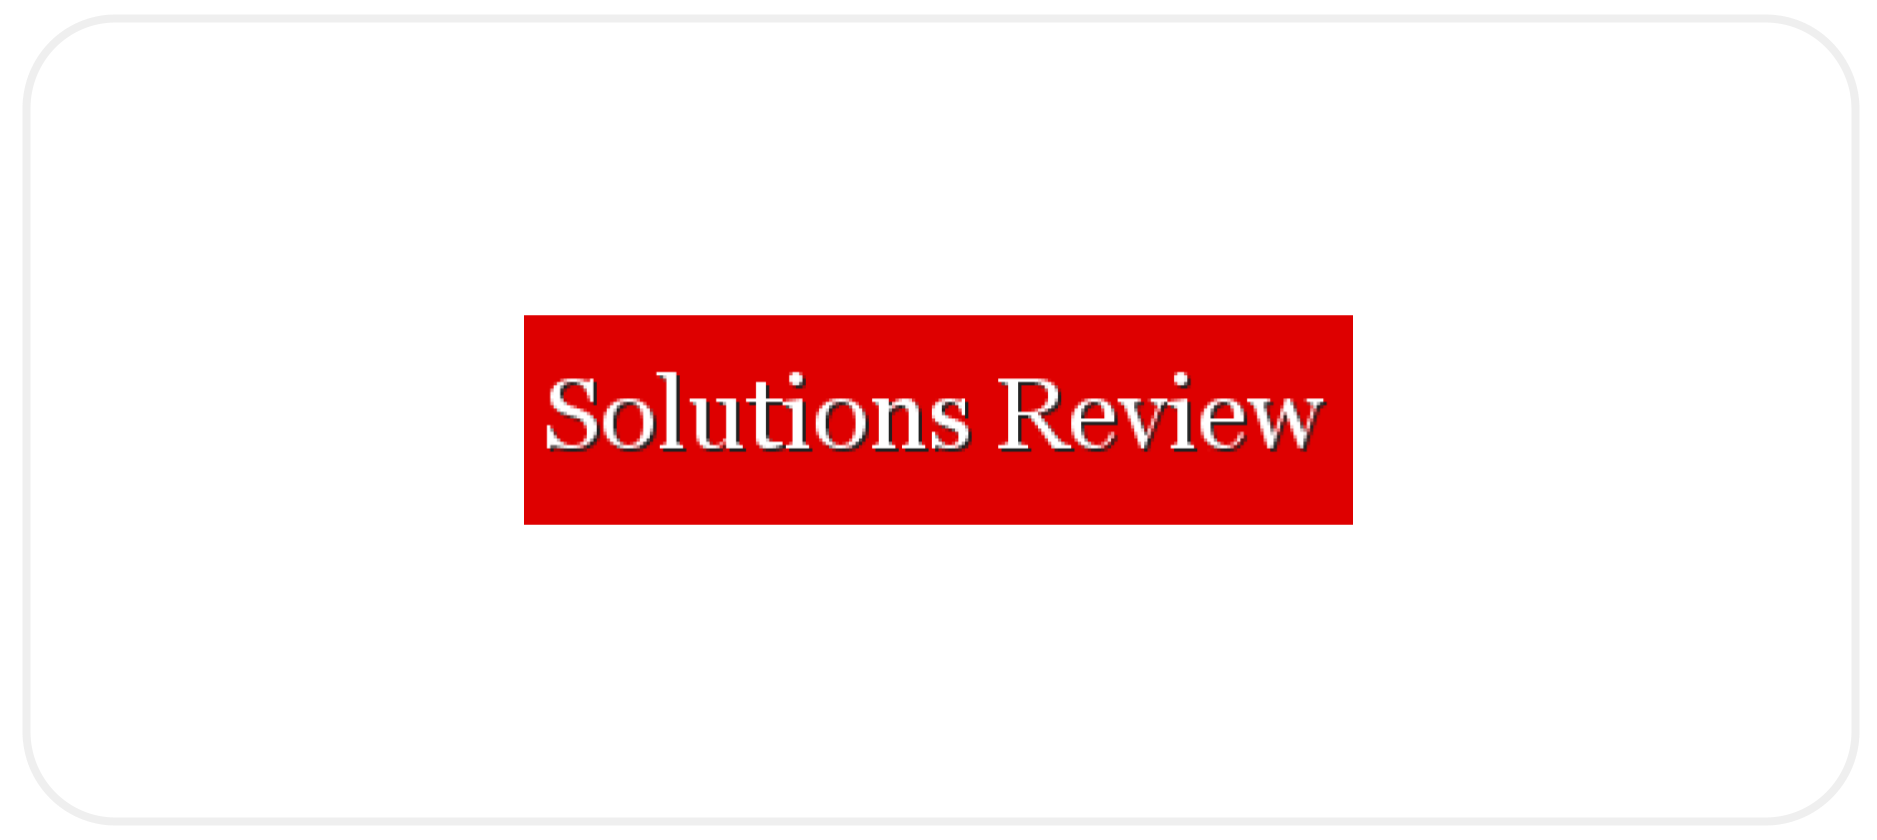 Solutions Review logo grey border